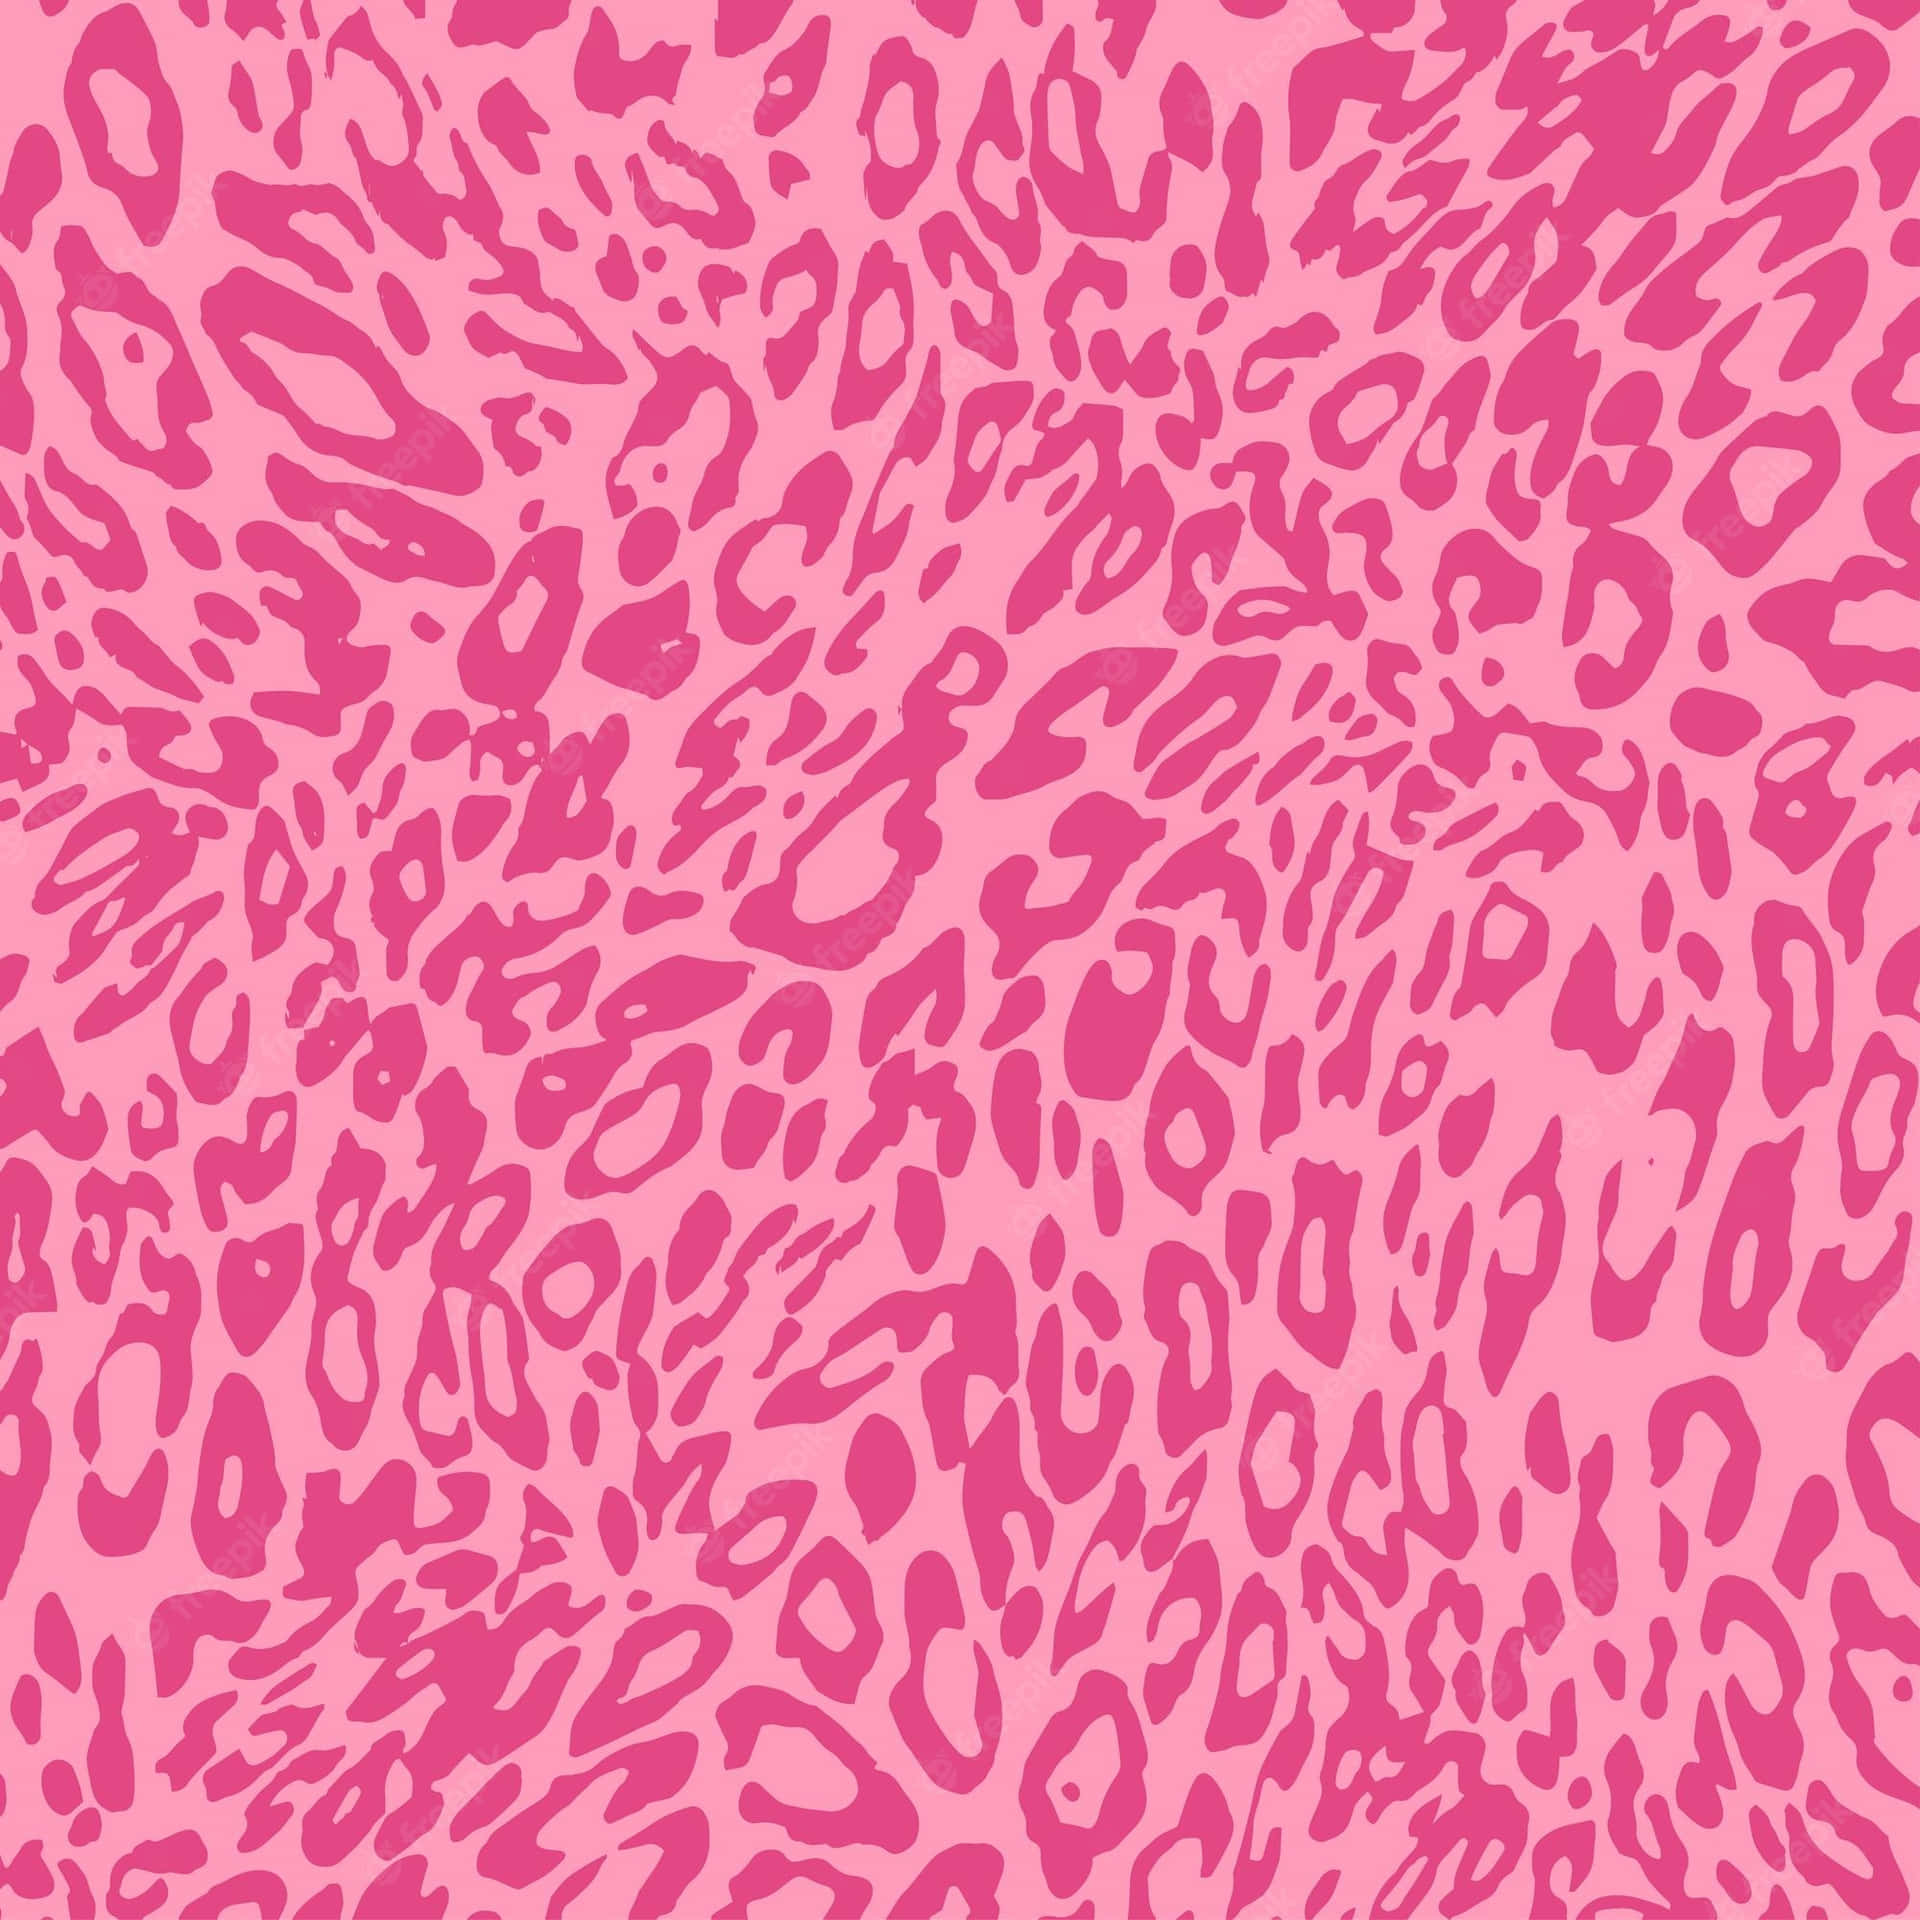 Download Pink Leopard Print Wallpaper | Wallpapers.com